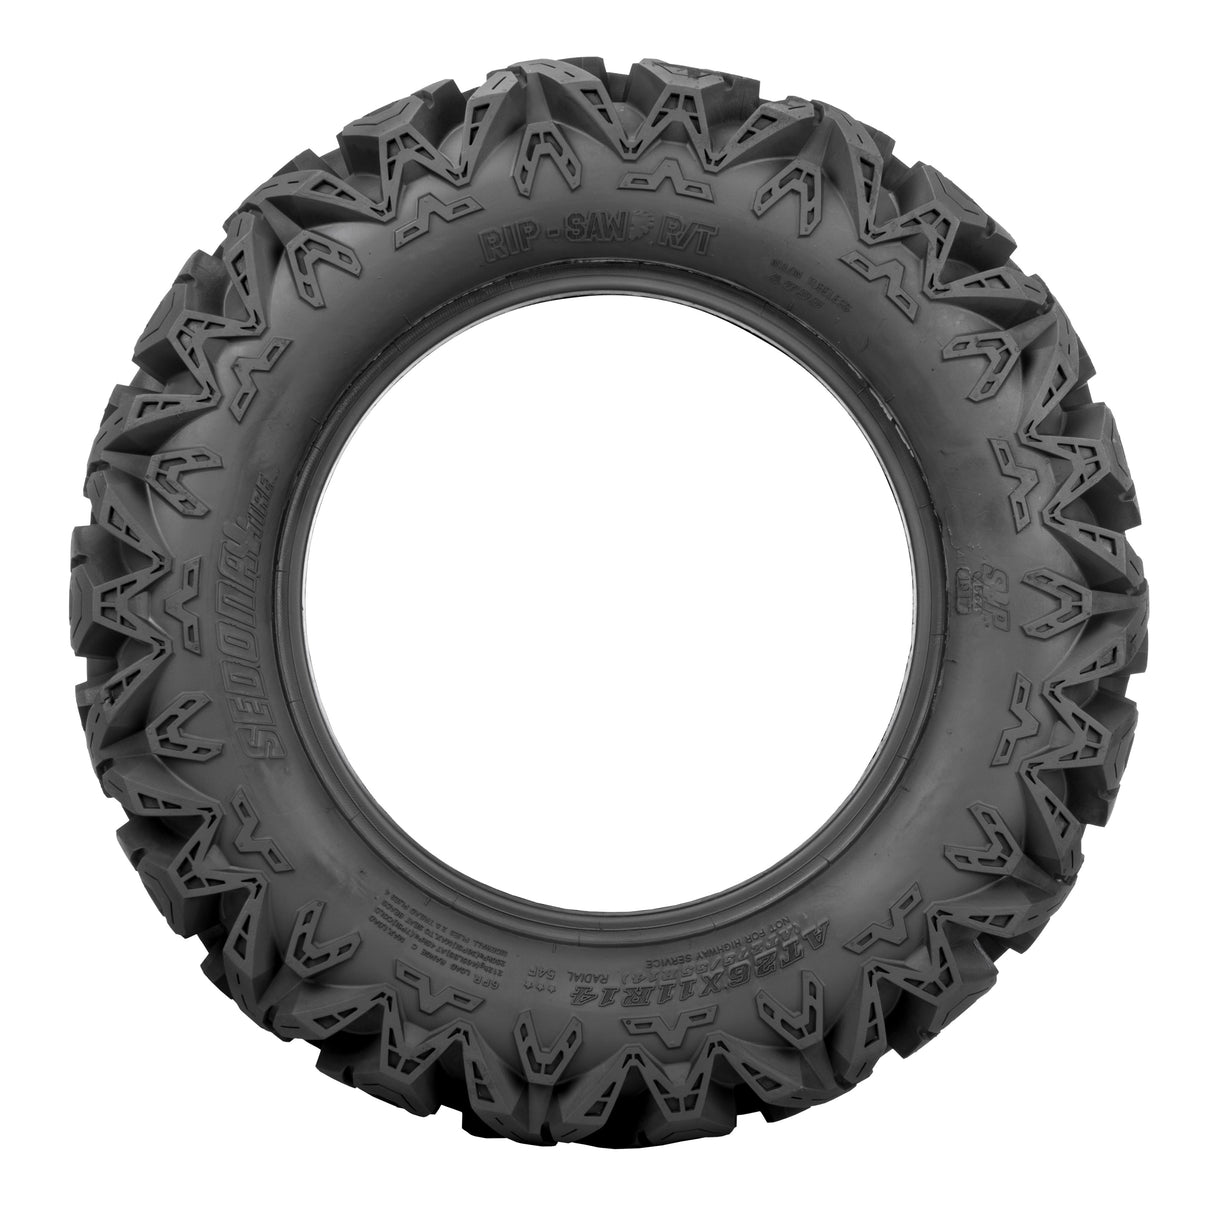 Tire Rip Saw R/T 26x11r14 Radial 6pr Lr 465lbs